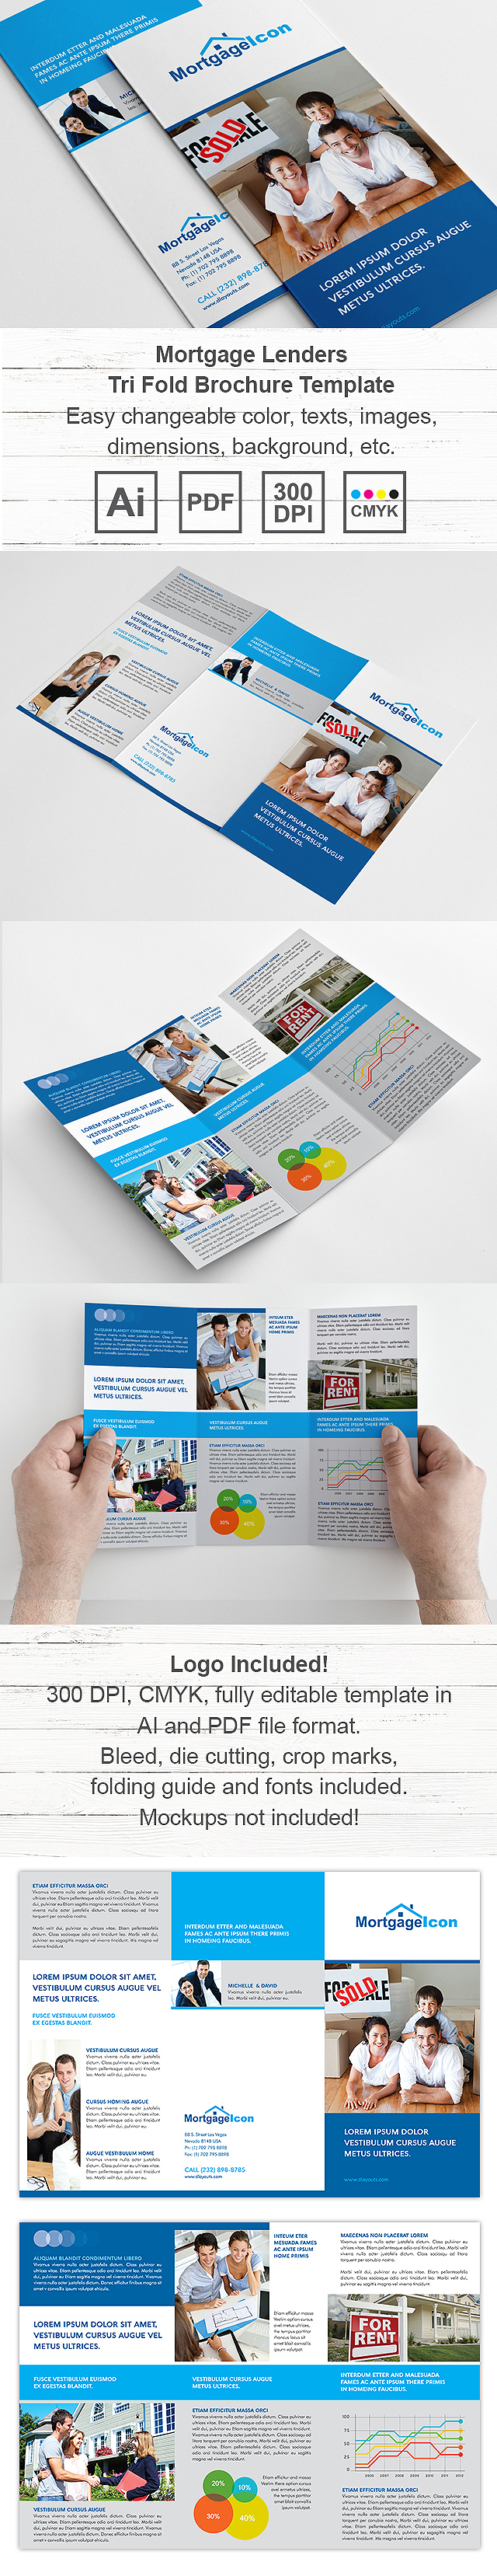 Mortgage Lenders Tri Fold Brochure Template